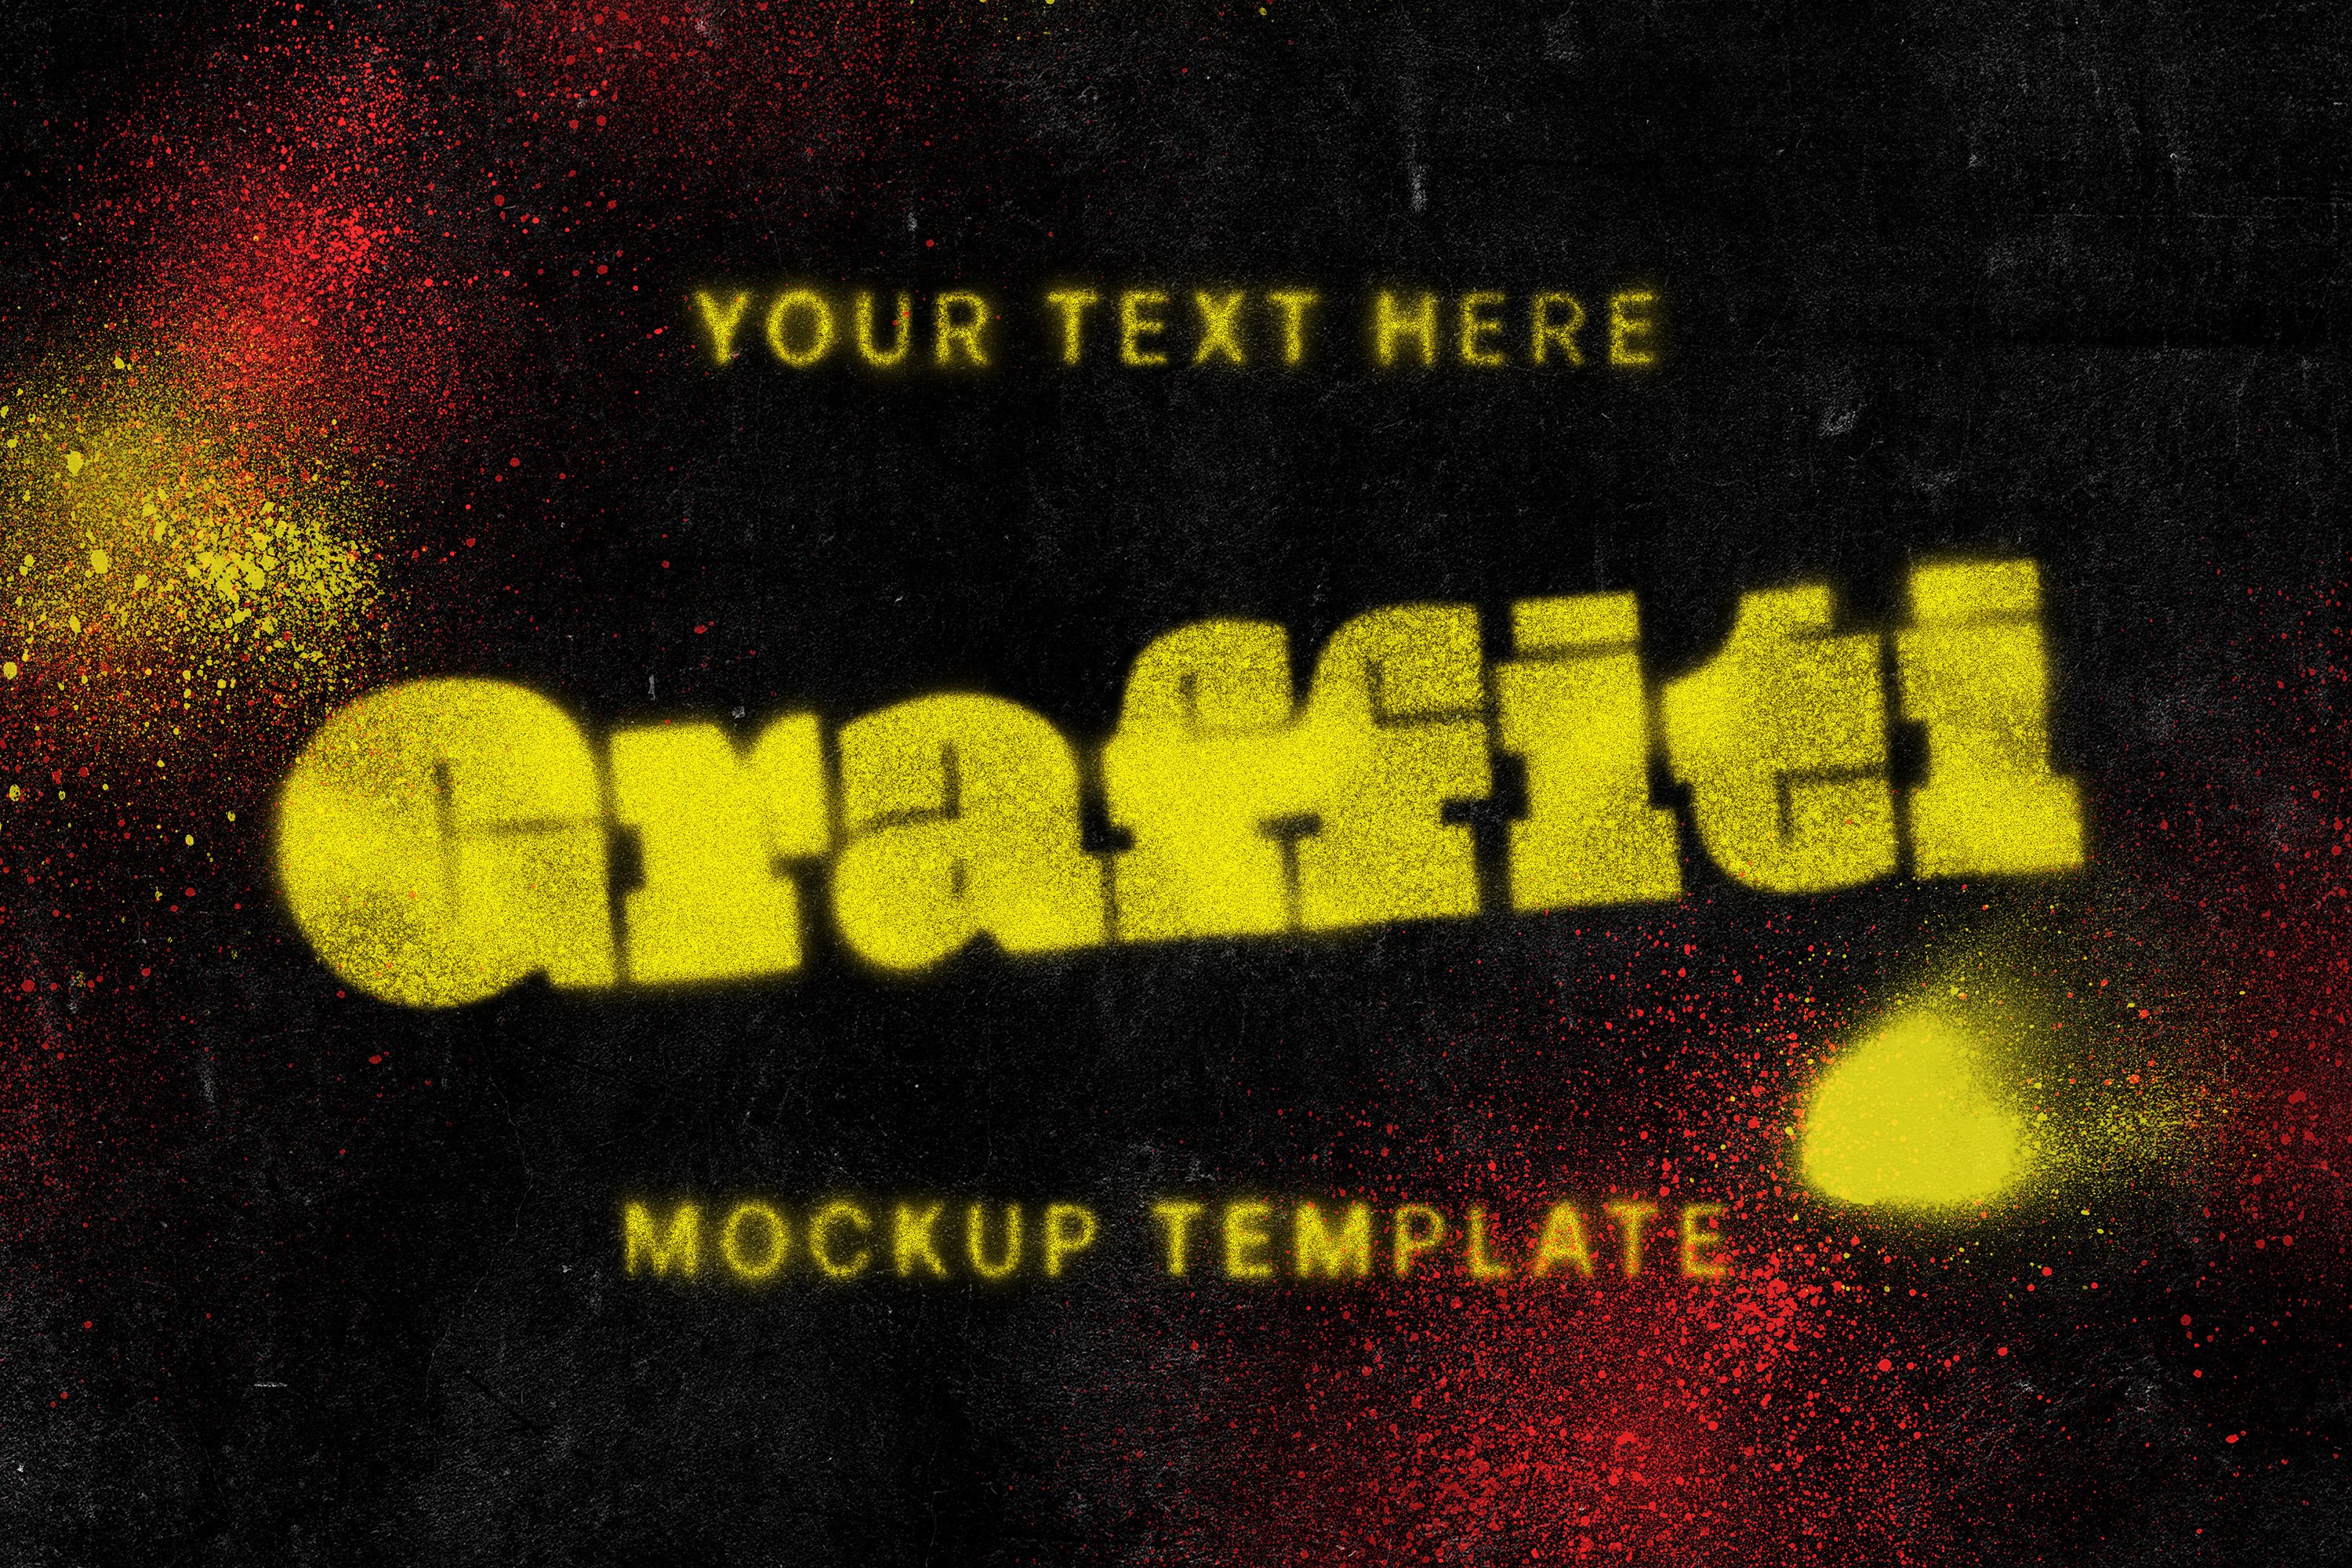 Graffiti Text Mockup Templatecover image.